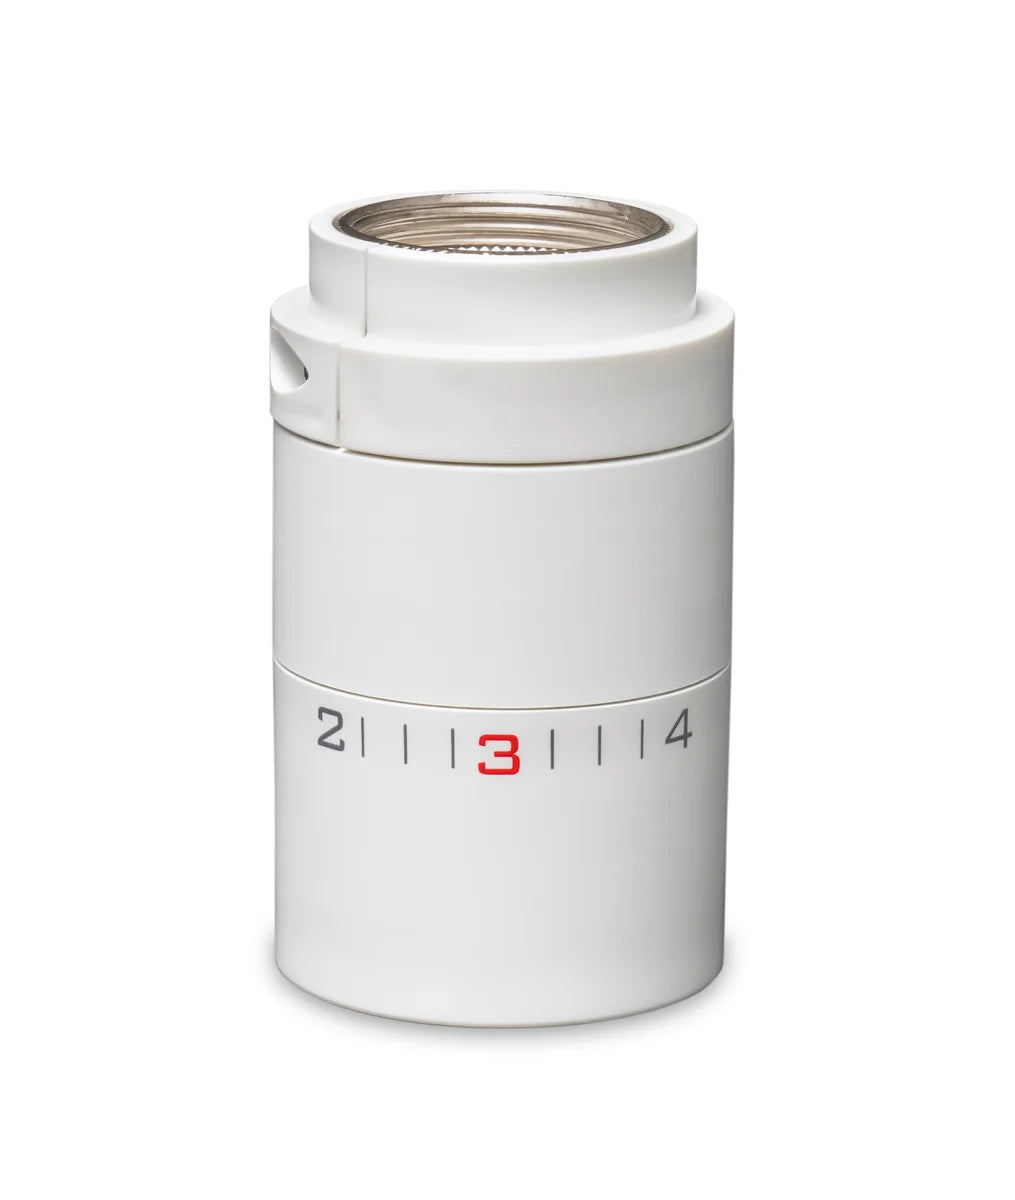 Cabezal termostático Waft V2 M30 x 1.5 sensor líquido blanco 6-28°C